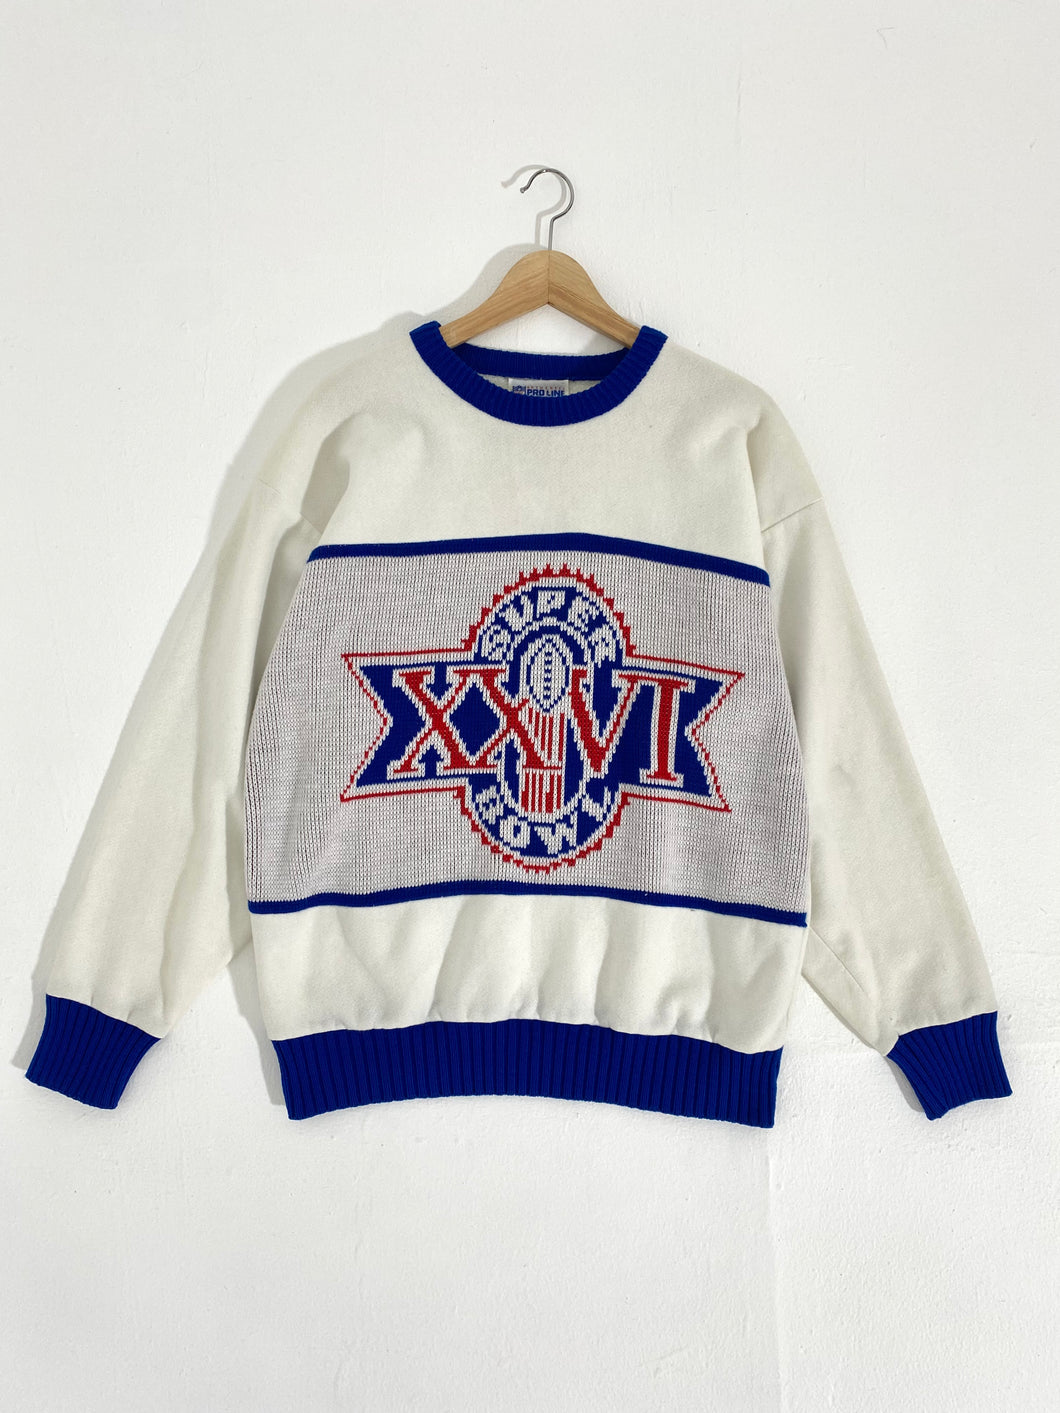 Vintage 1992 NFL Super Bowl XXVI Knitted Sweater Sz. L